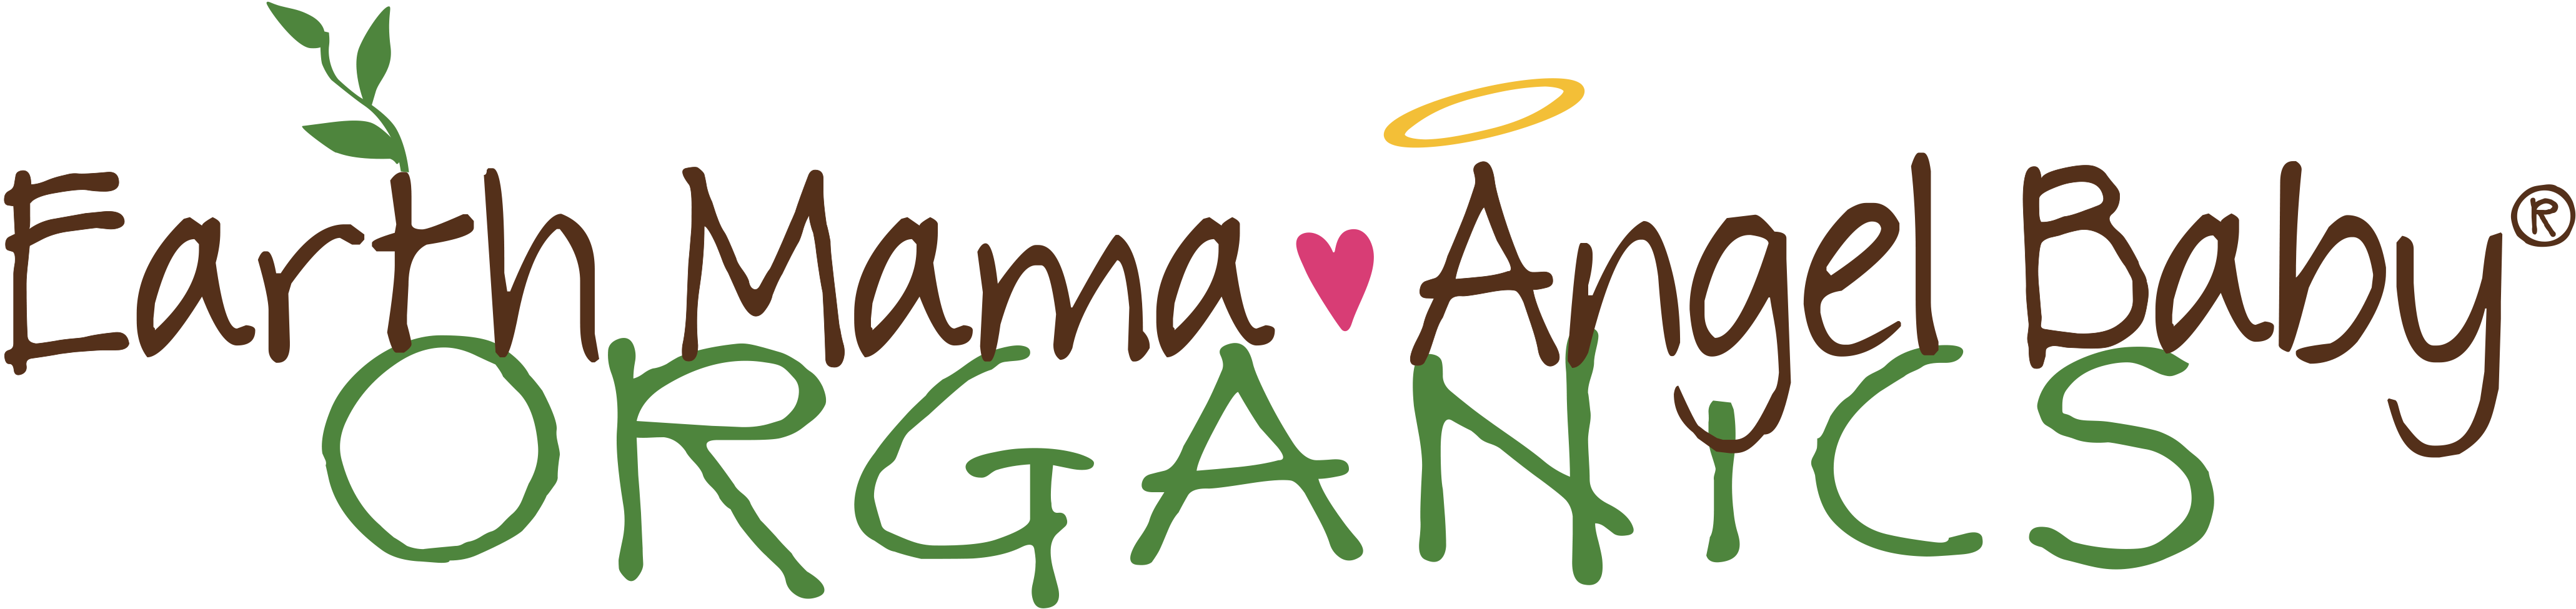 Earth Mama Angel Baby - Earth Mama Angel Baby Logo (4123x975), Png Download